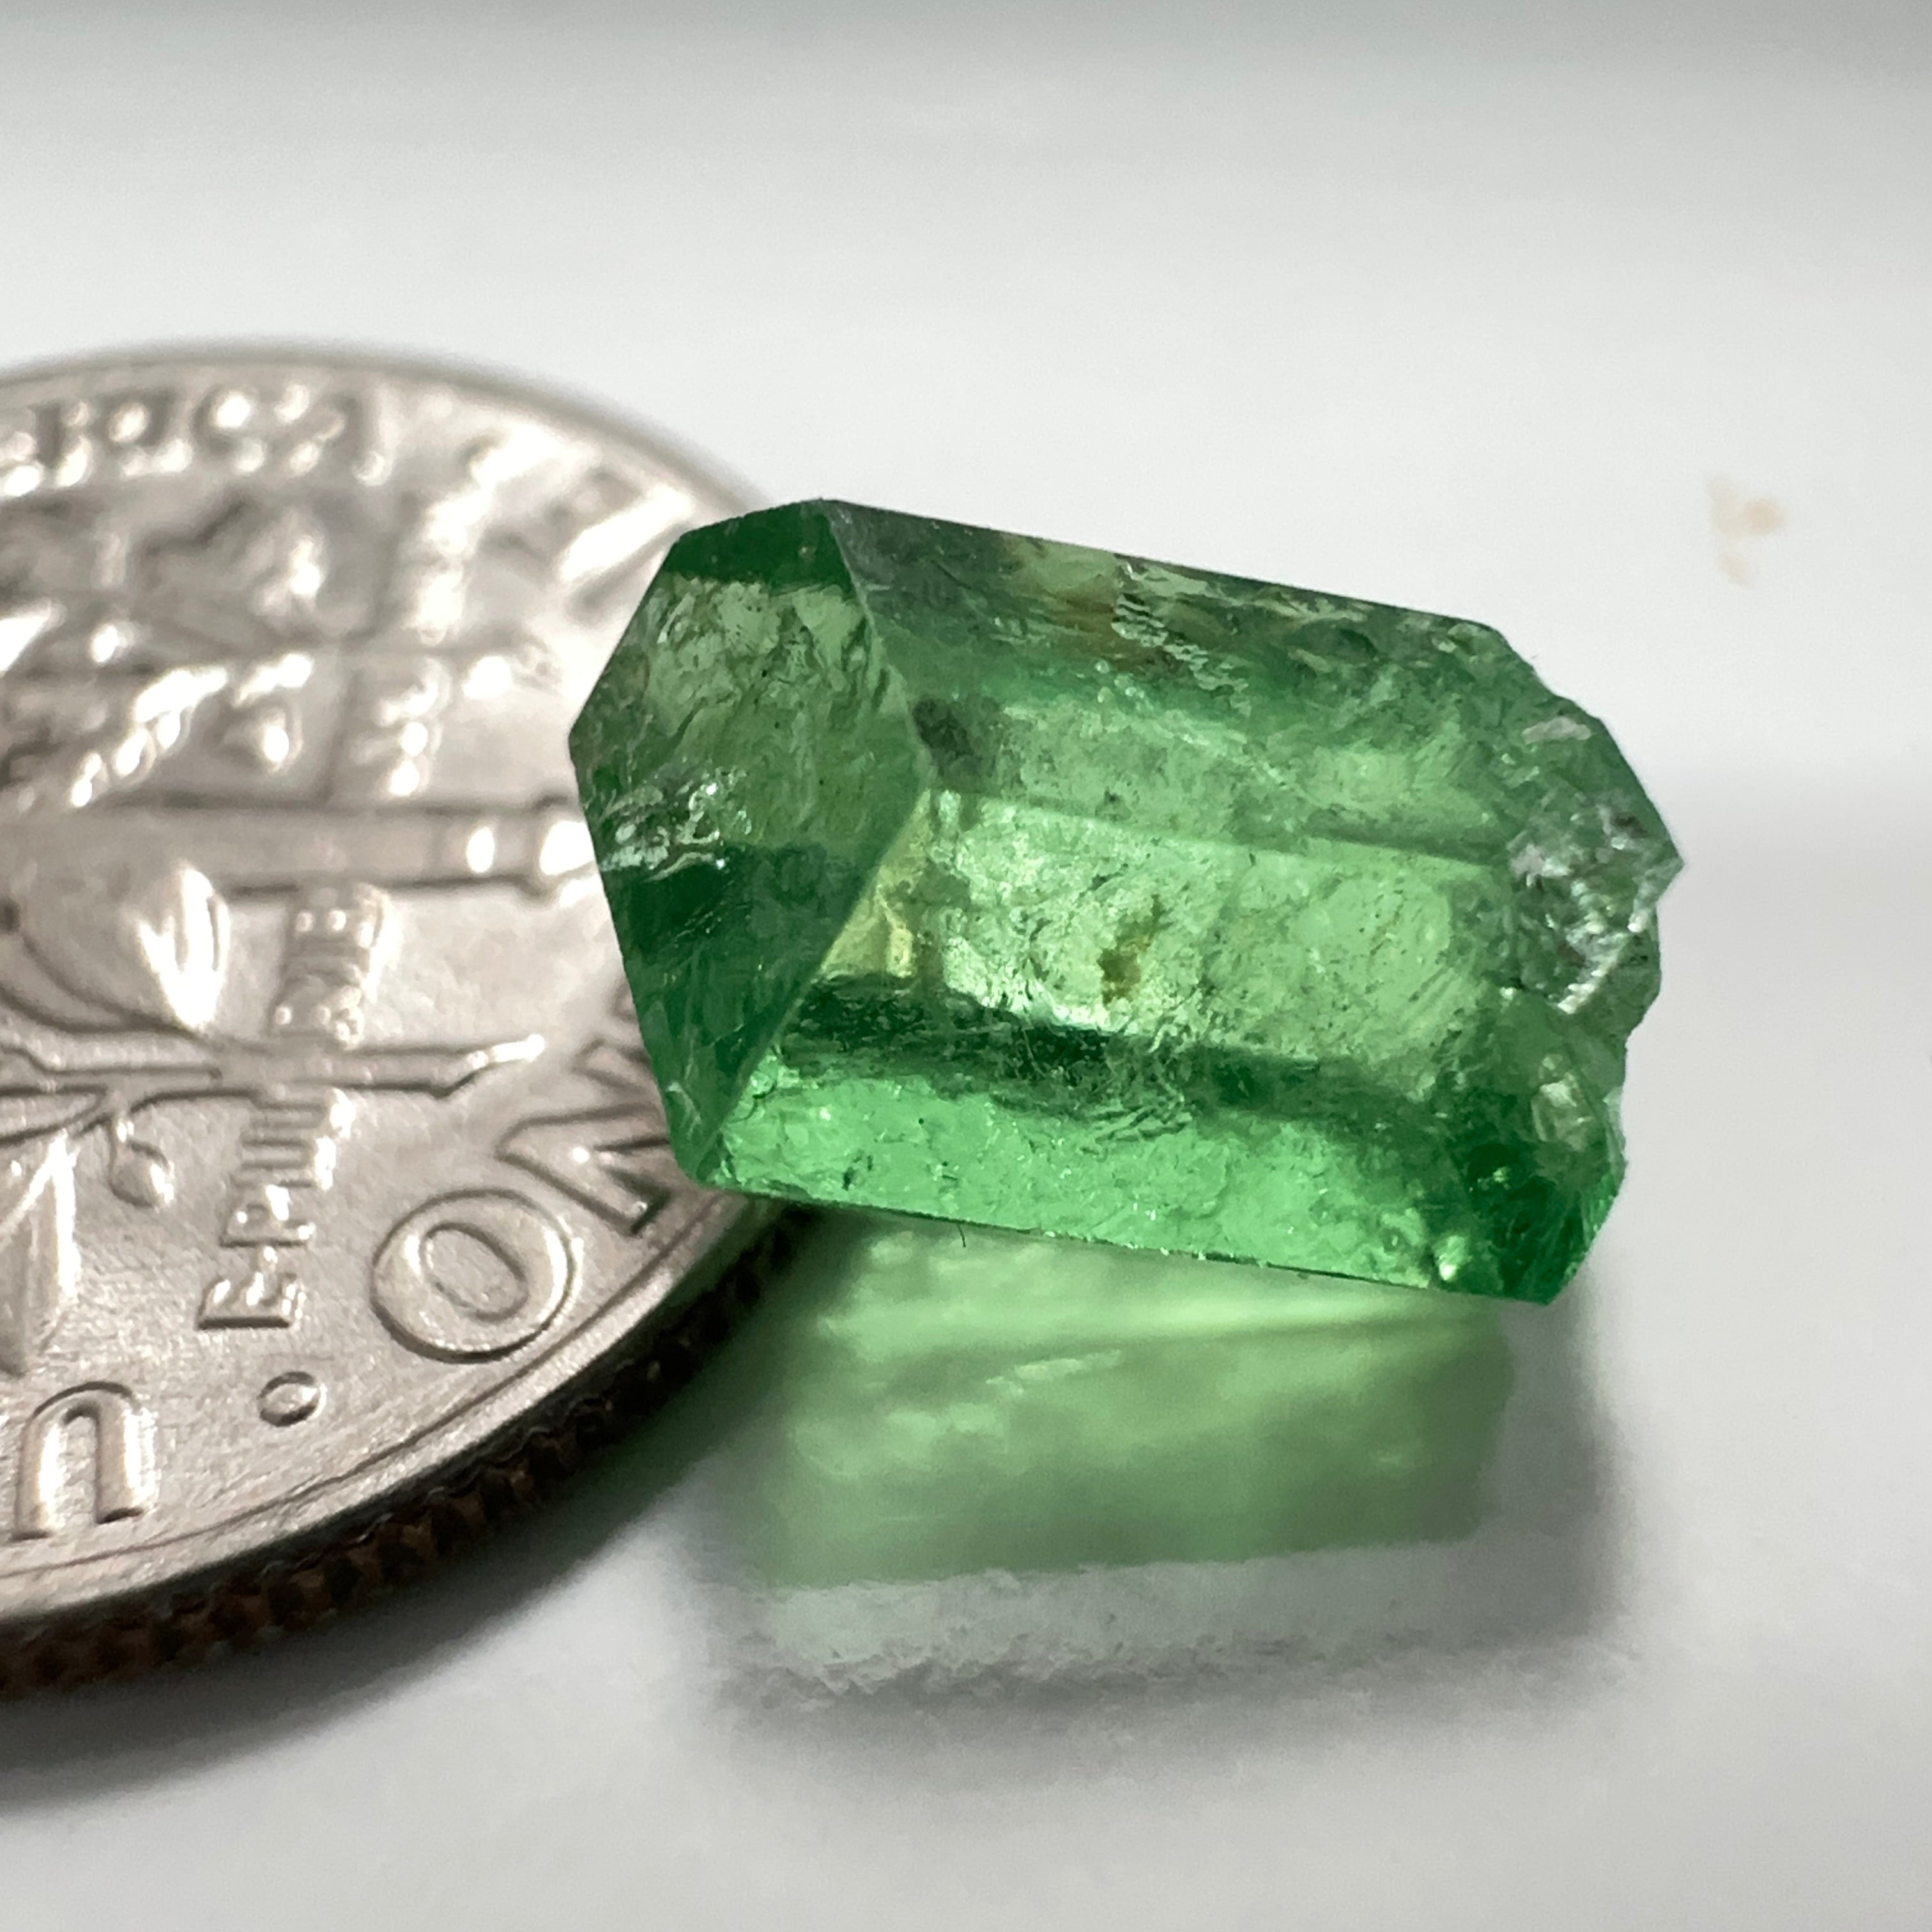 3.65ct A very unusual Tsavorite crystal from Merelani in Tanzania, Untreated Unheated